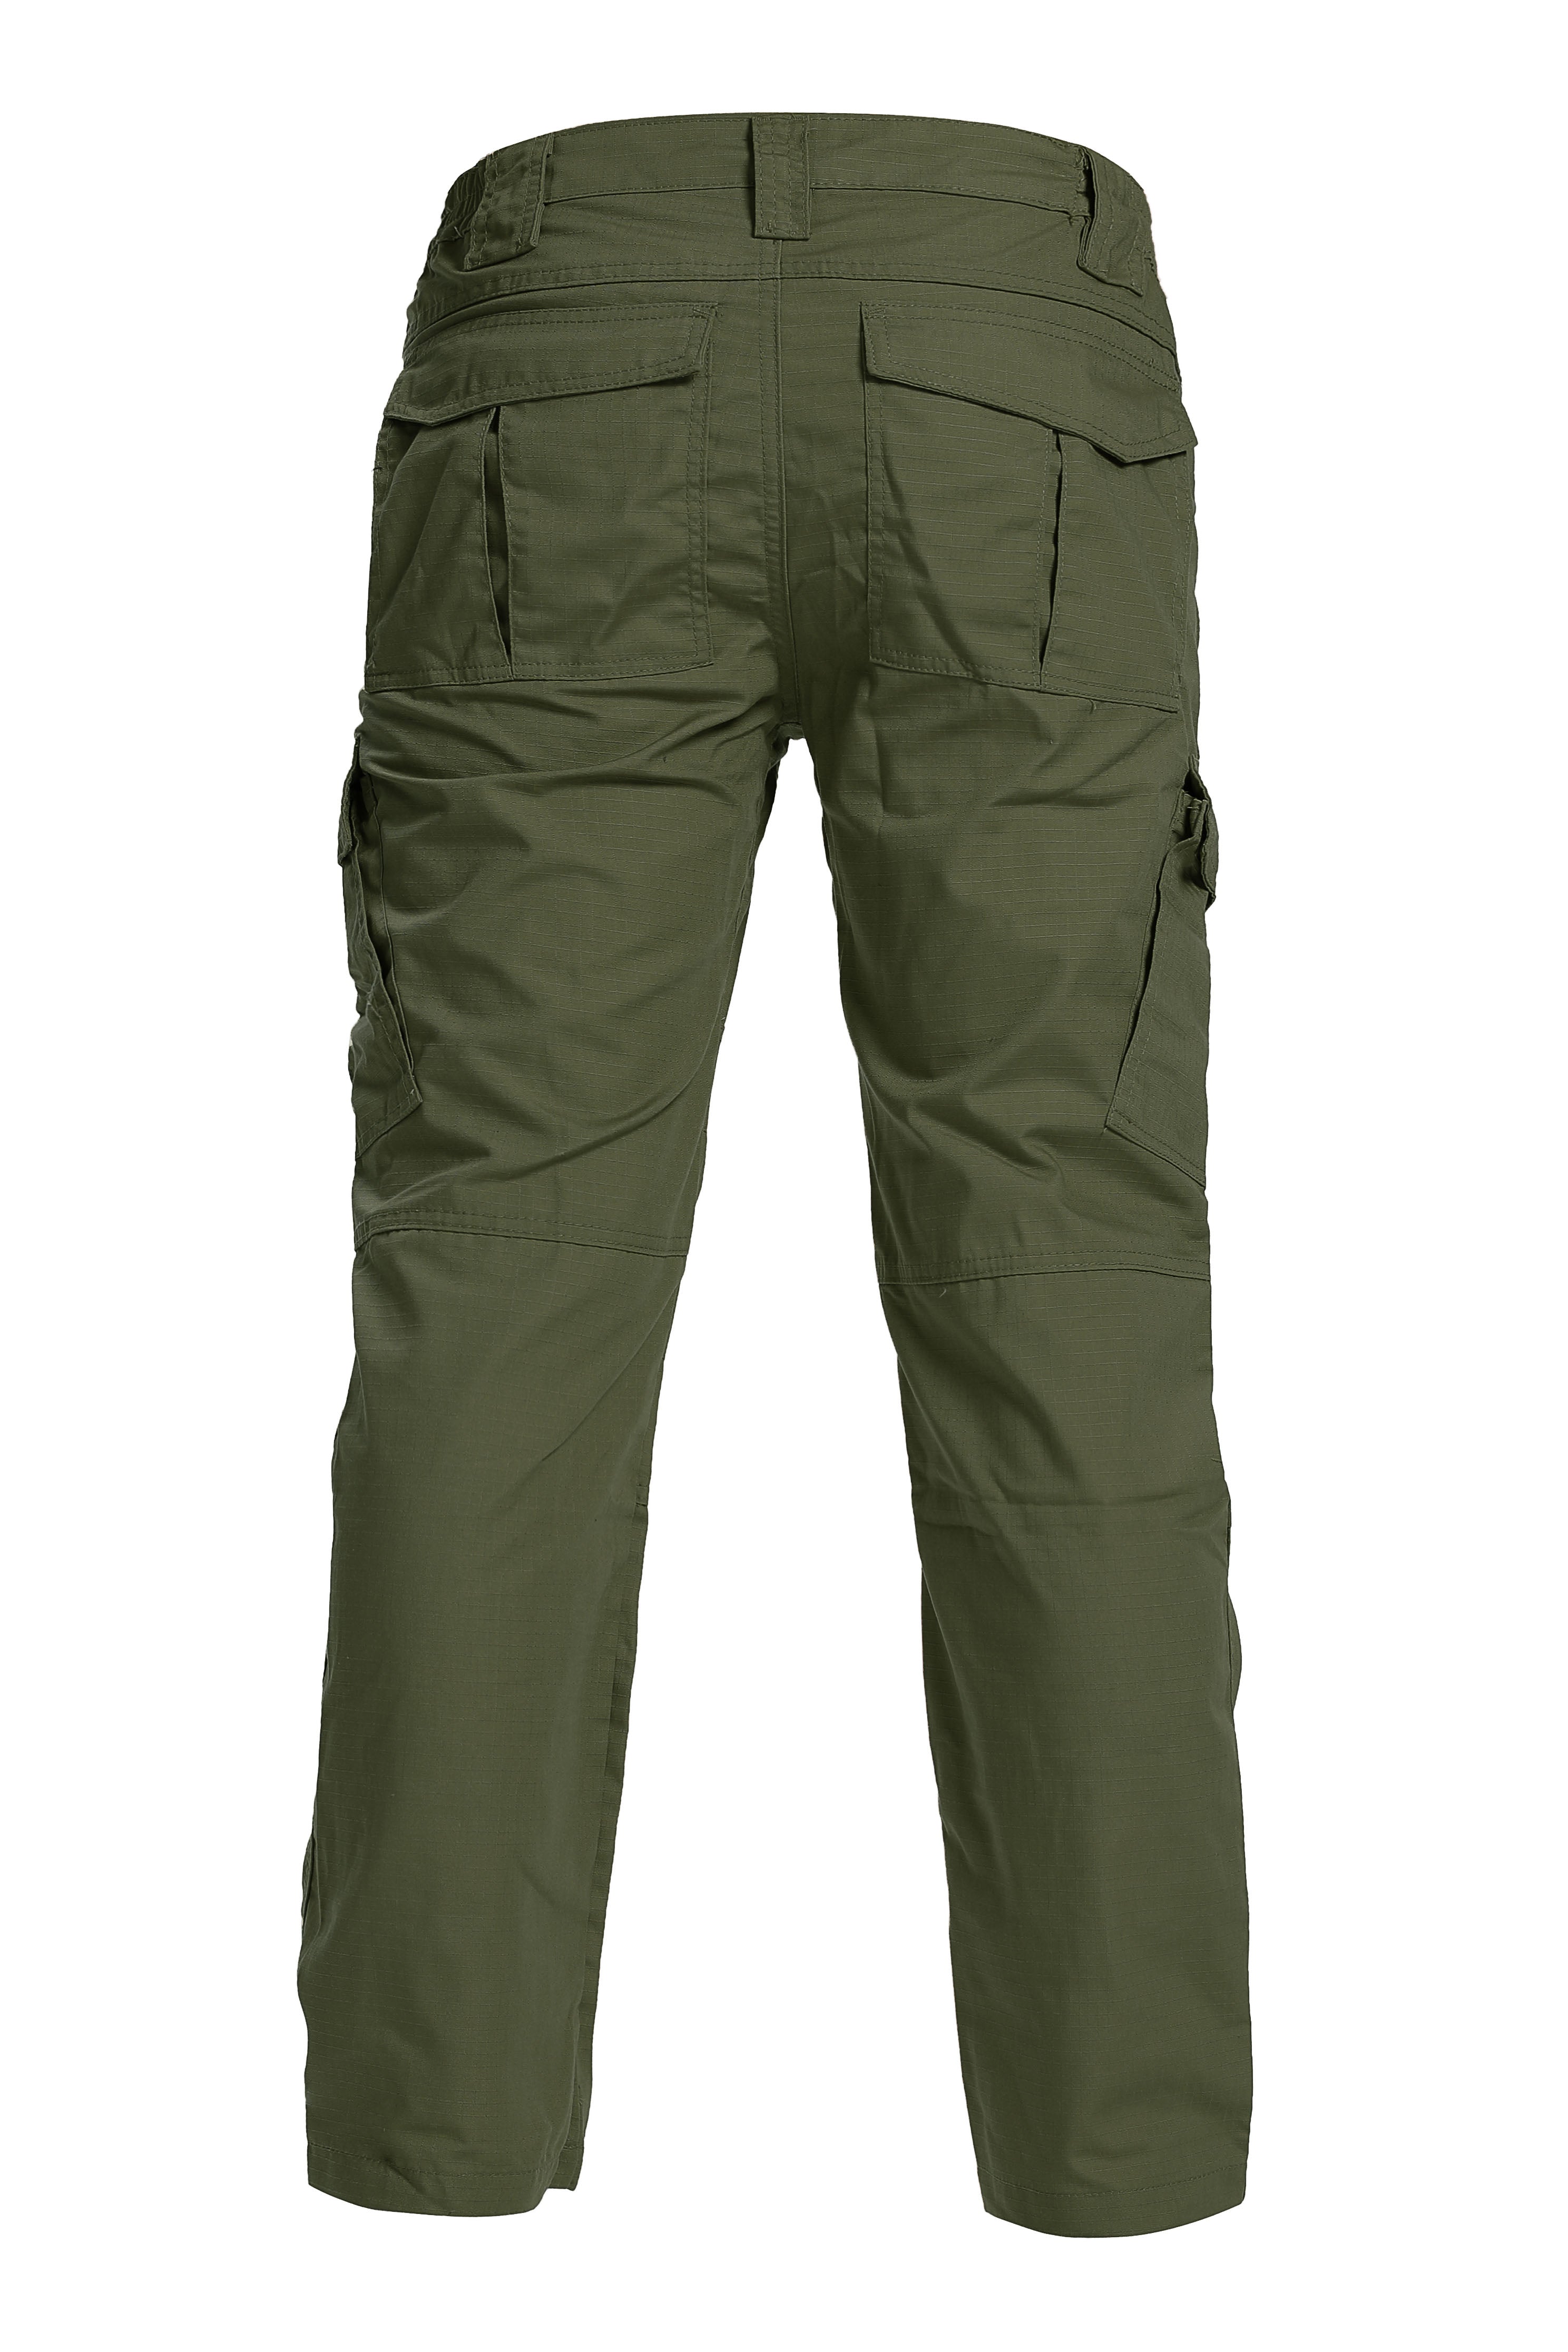 Men's Tactical Cargo Pants Elastic Multi Pocket Outdoor Casual Pants  Military Army Combat Trousers Sweatpants Plus Size 6XL